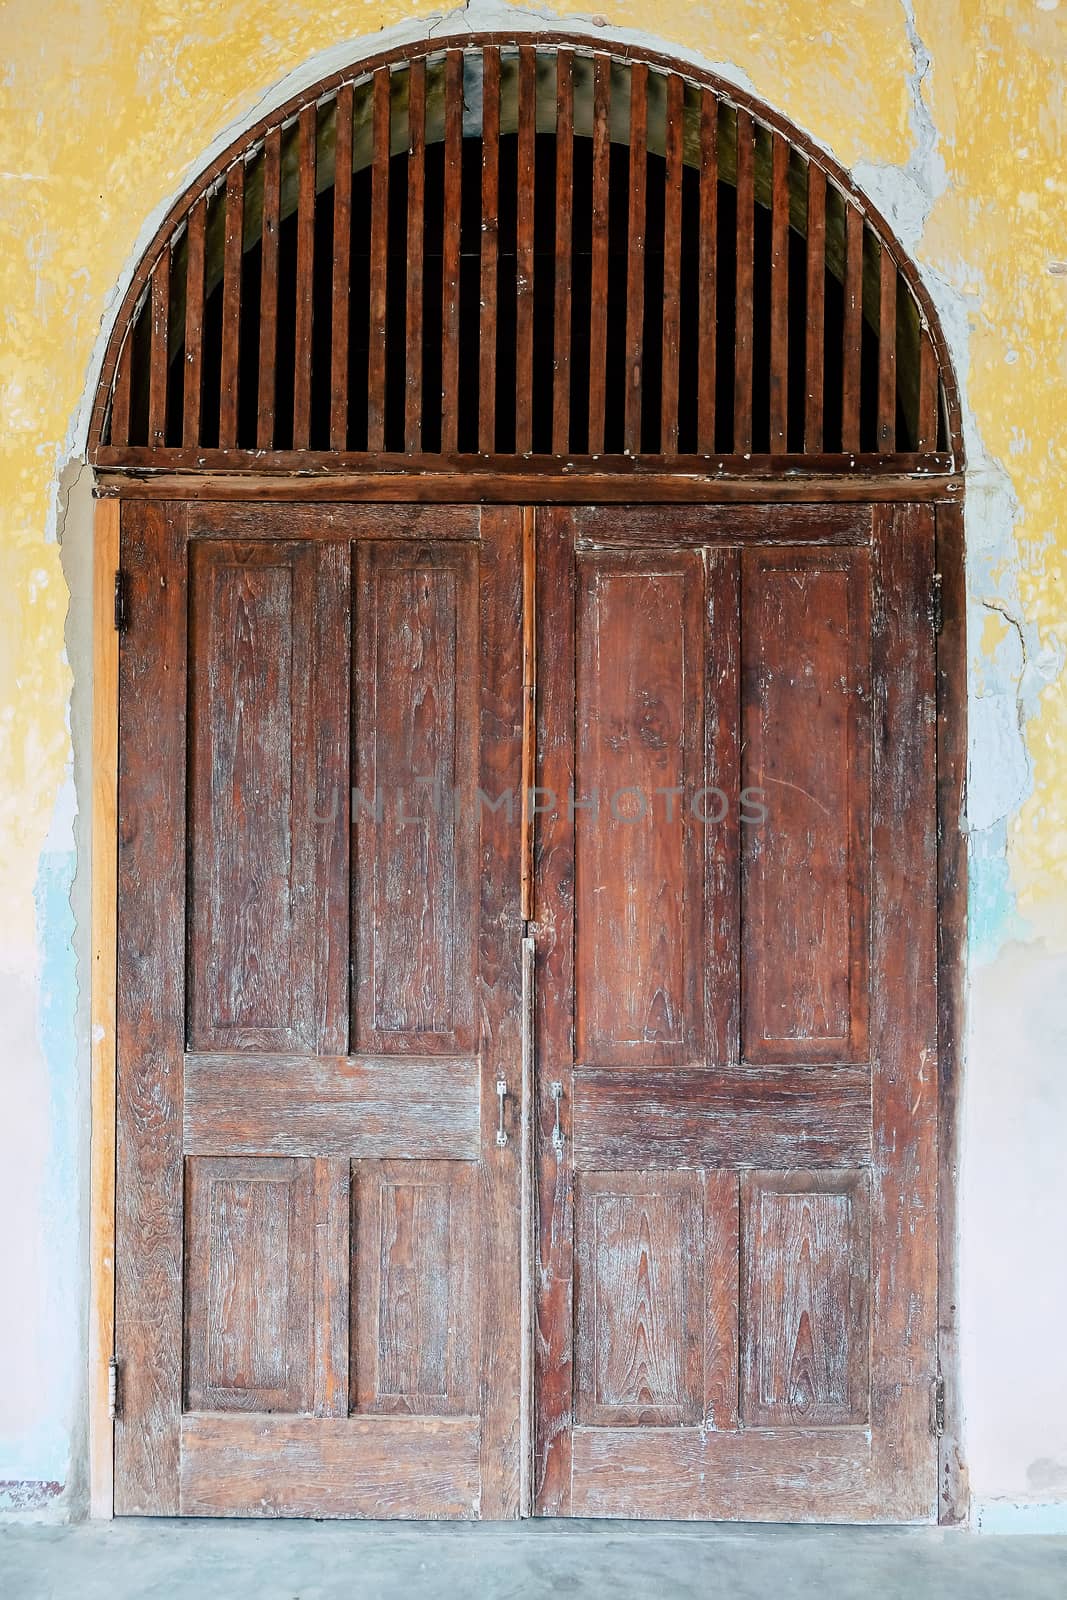 A ancient door,classical architecture building detail